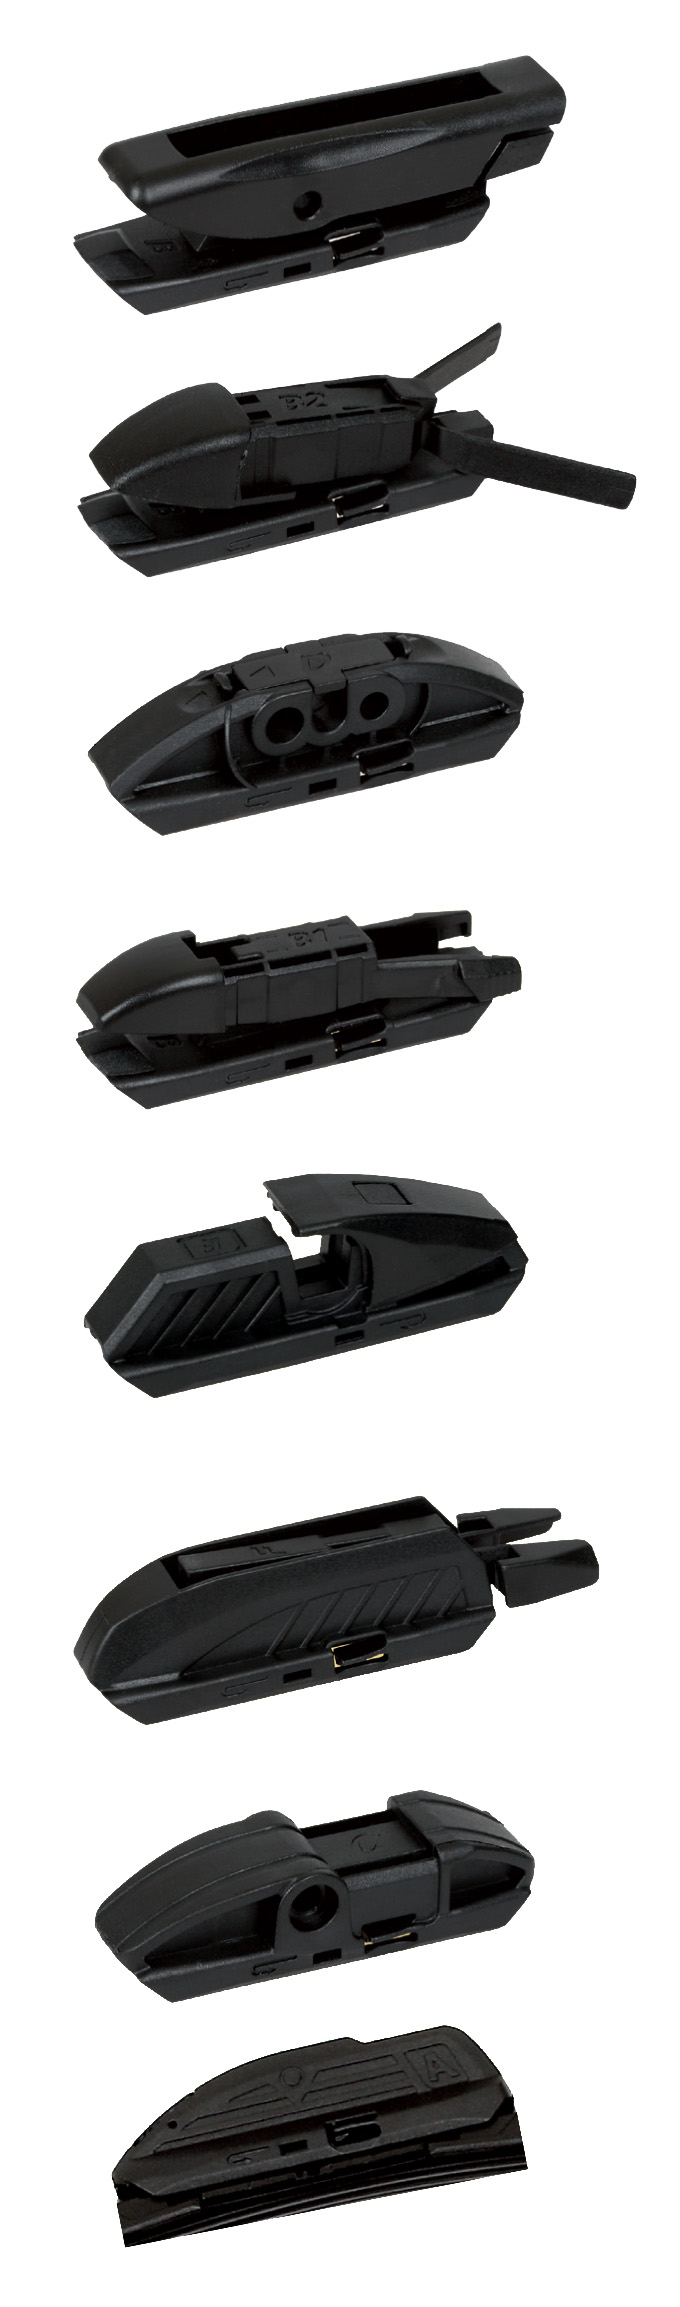 Filson wiper blade 8 adaptors 58 cm (23“) - 1 pcs thumb